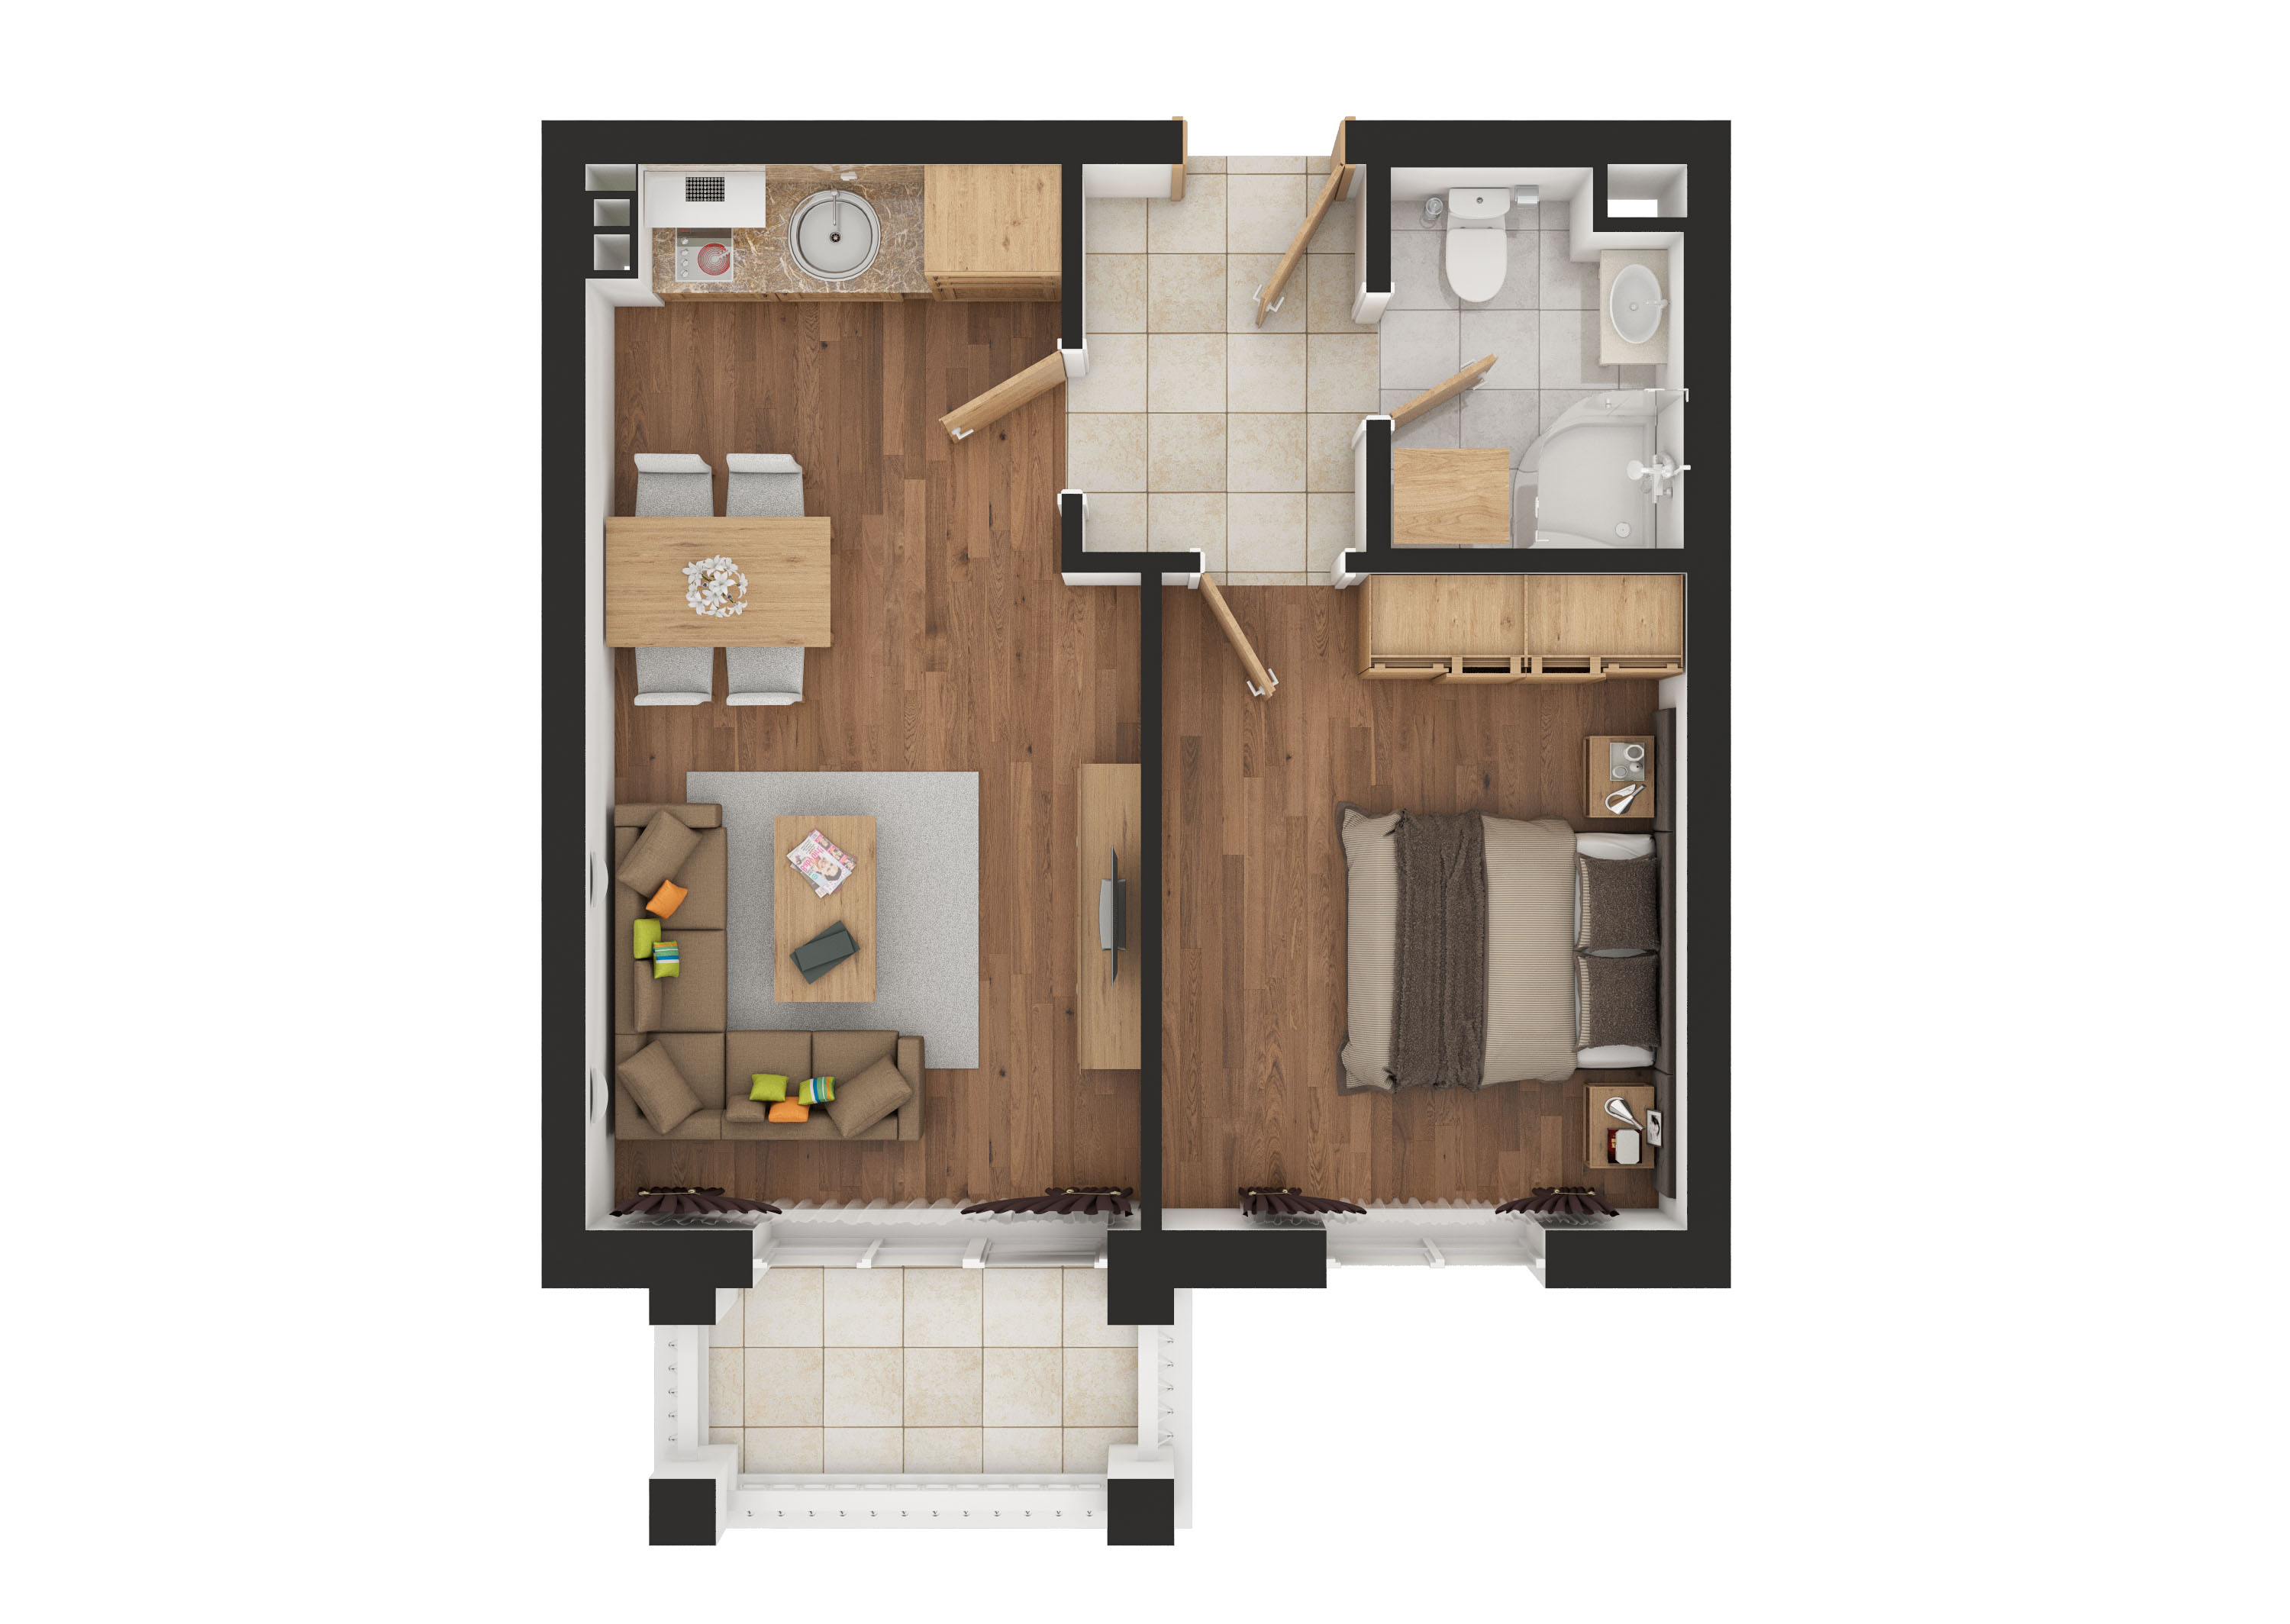 For Sale: New Complex! One-bedroom apartment in Emilia Romana Park